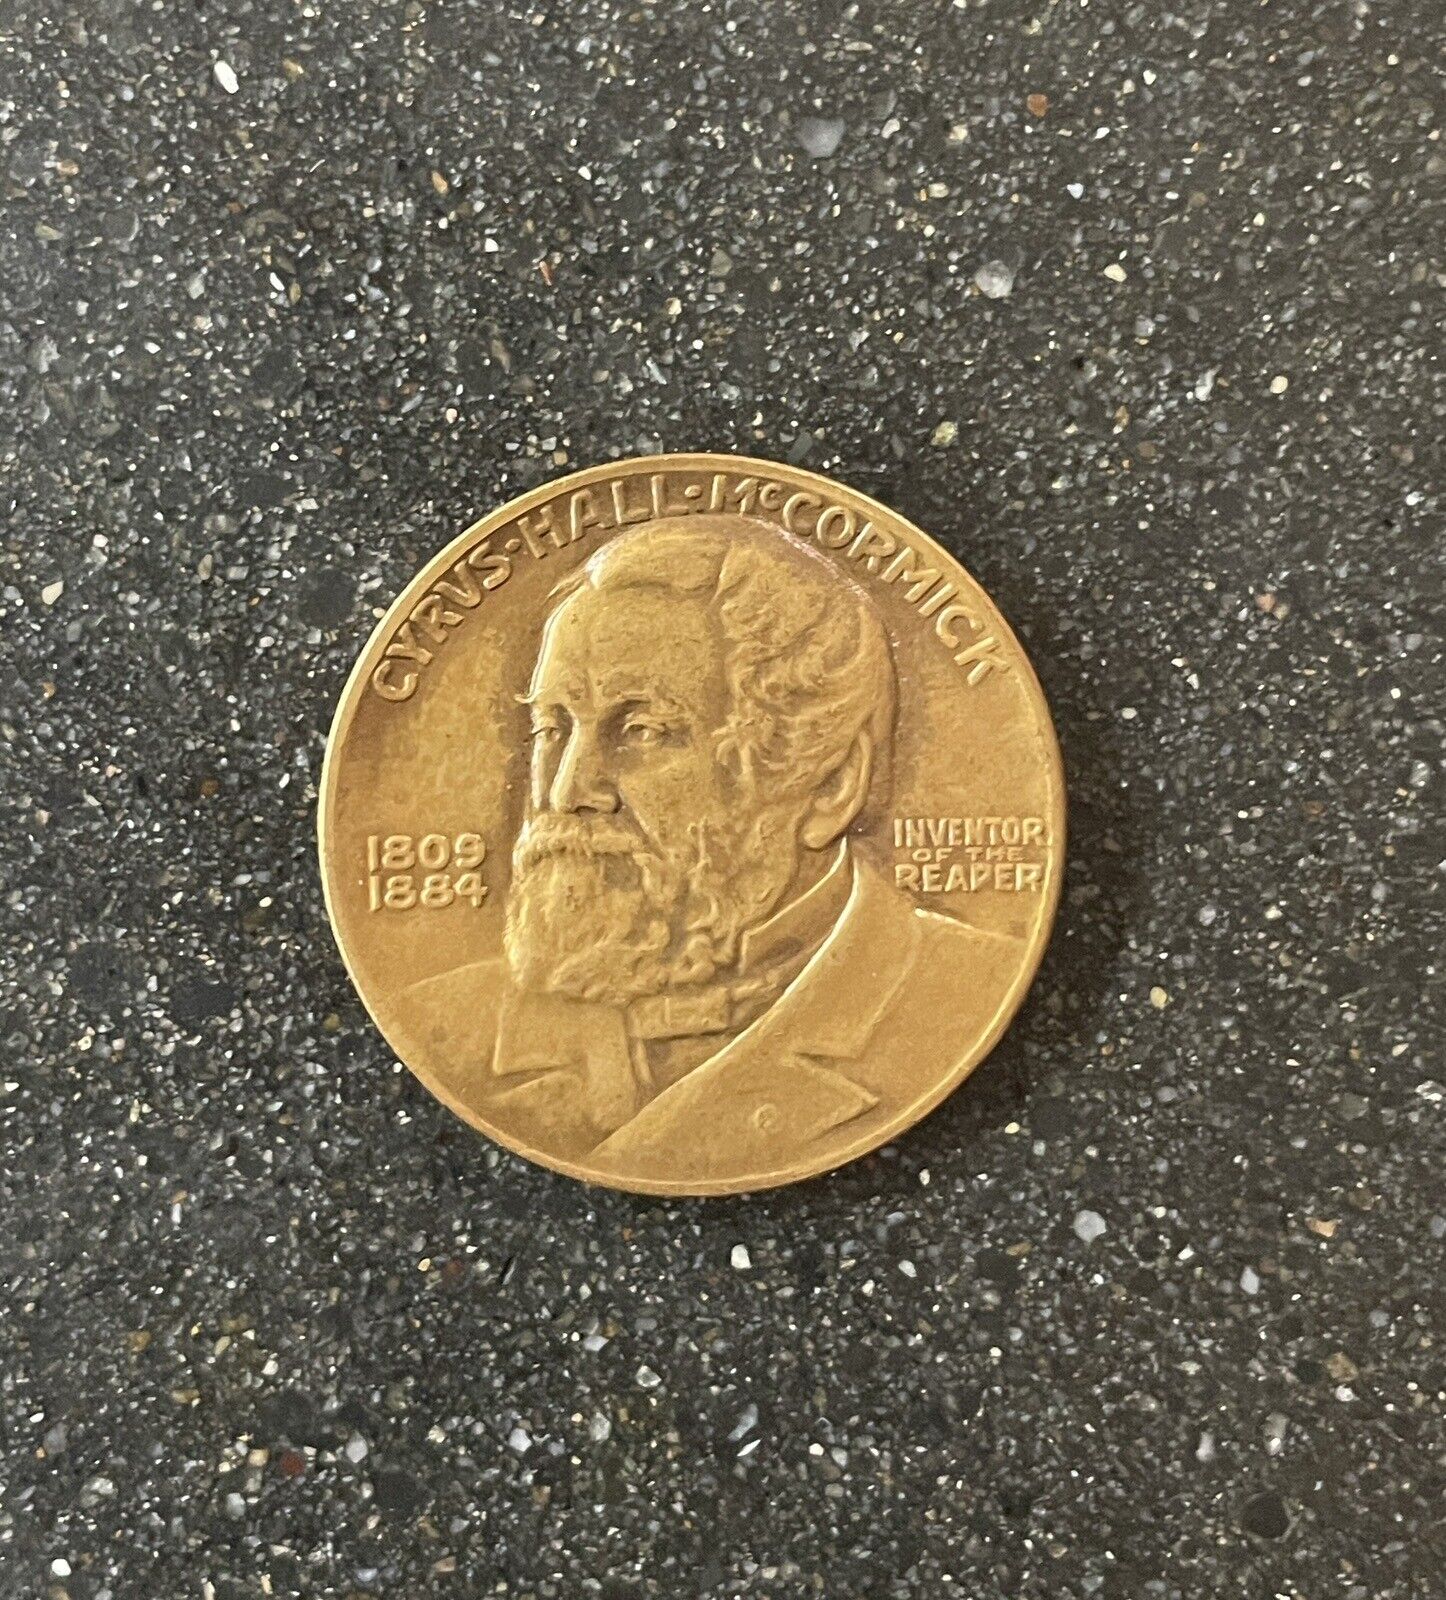 1931 International Harvester Reaper Centennial Coin Cyrus Hall McCormick Medal